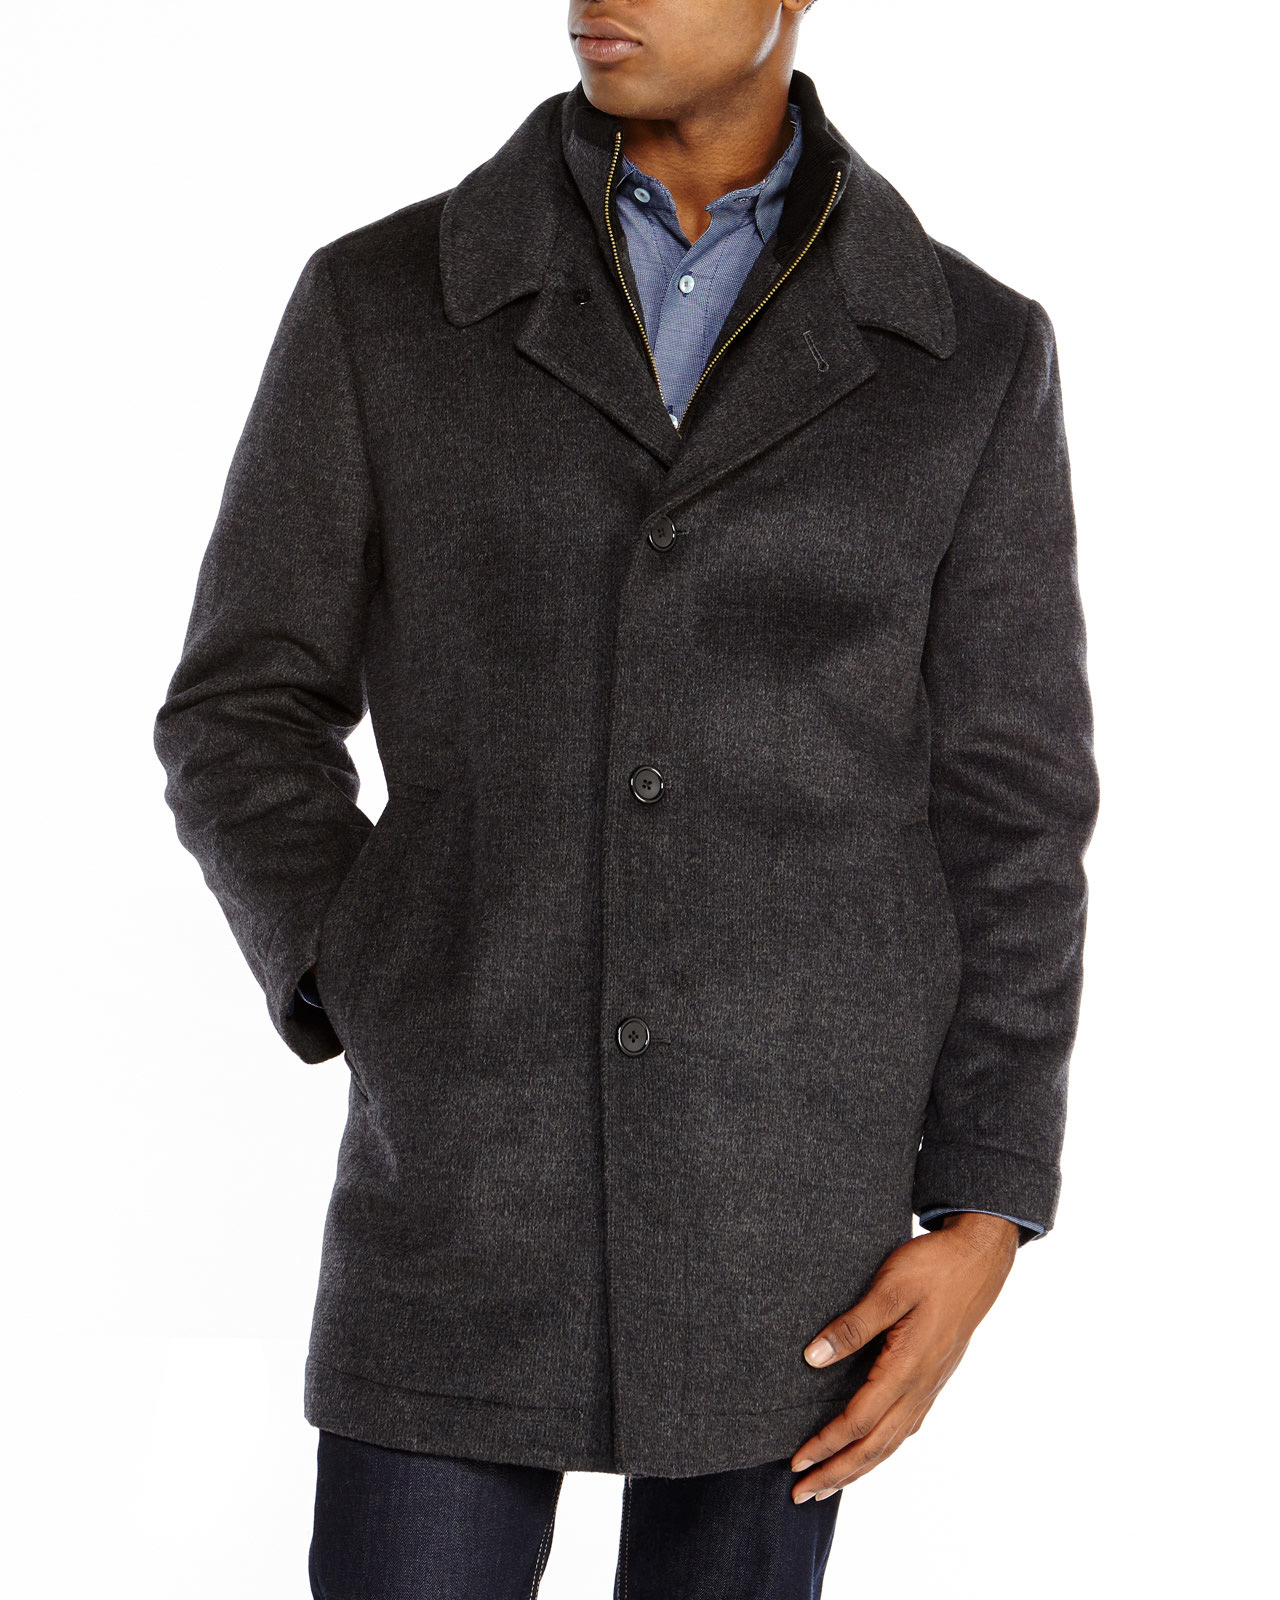 Hart schaffner marx Wool Blend Jacket in Gray for Men | Lyst